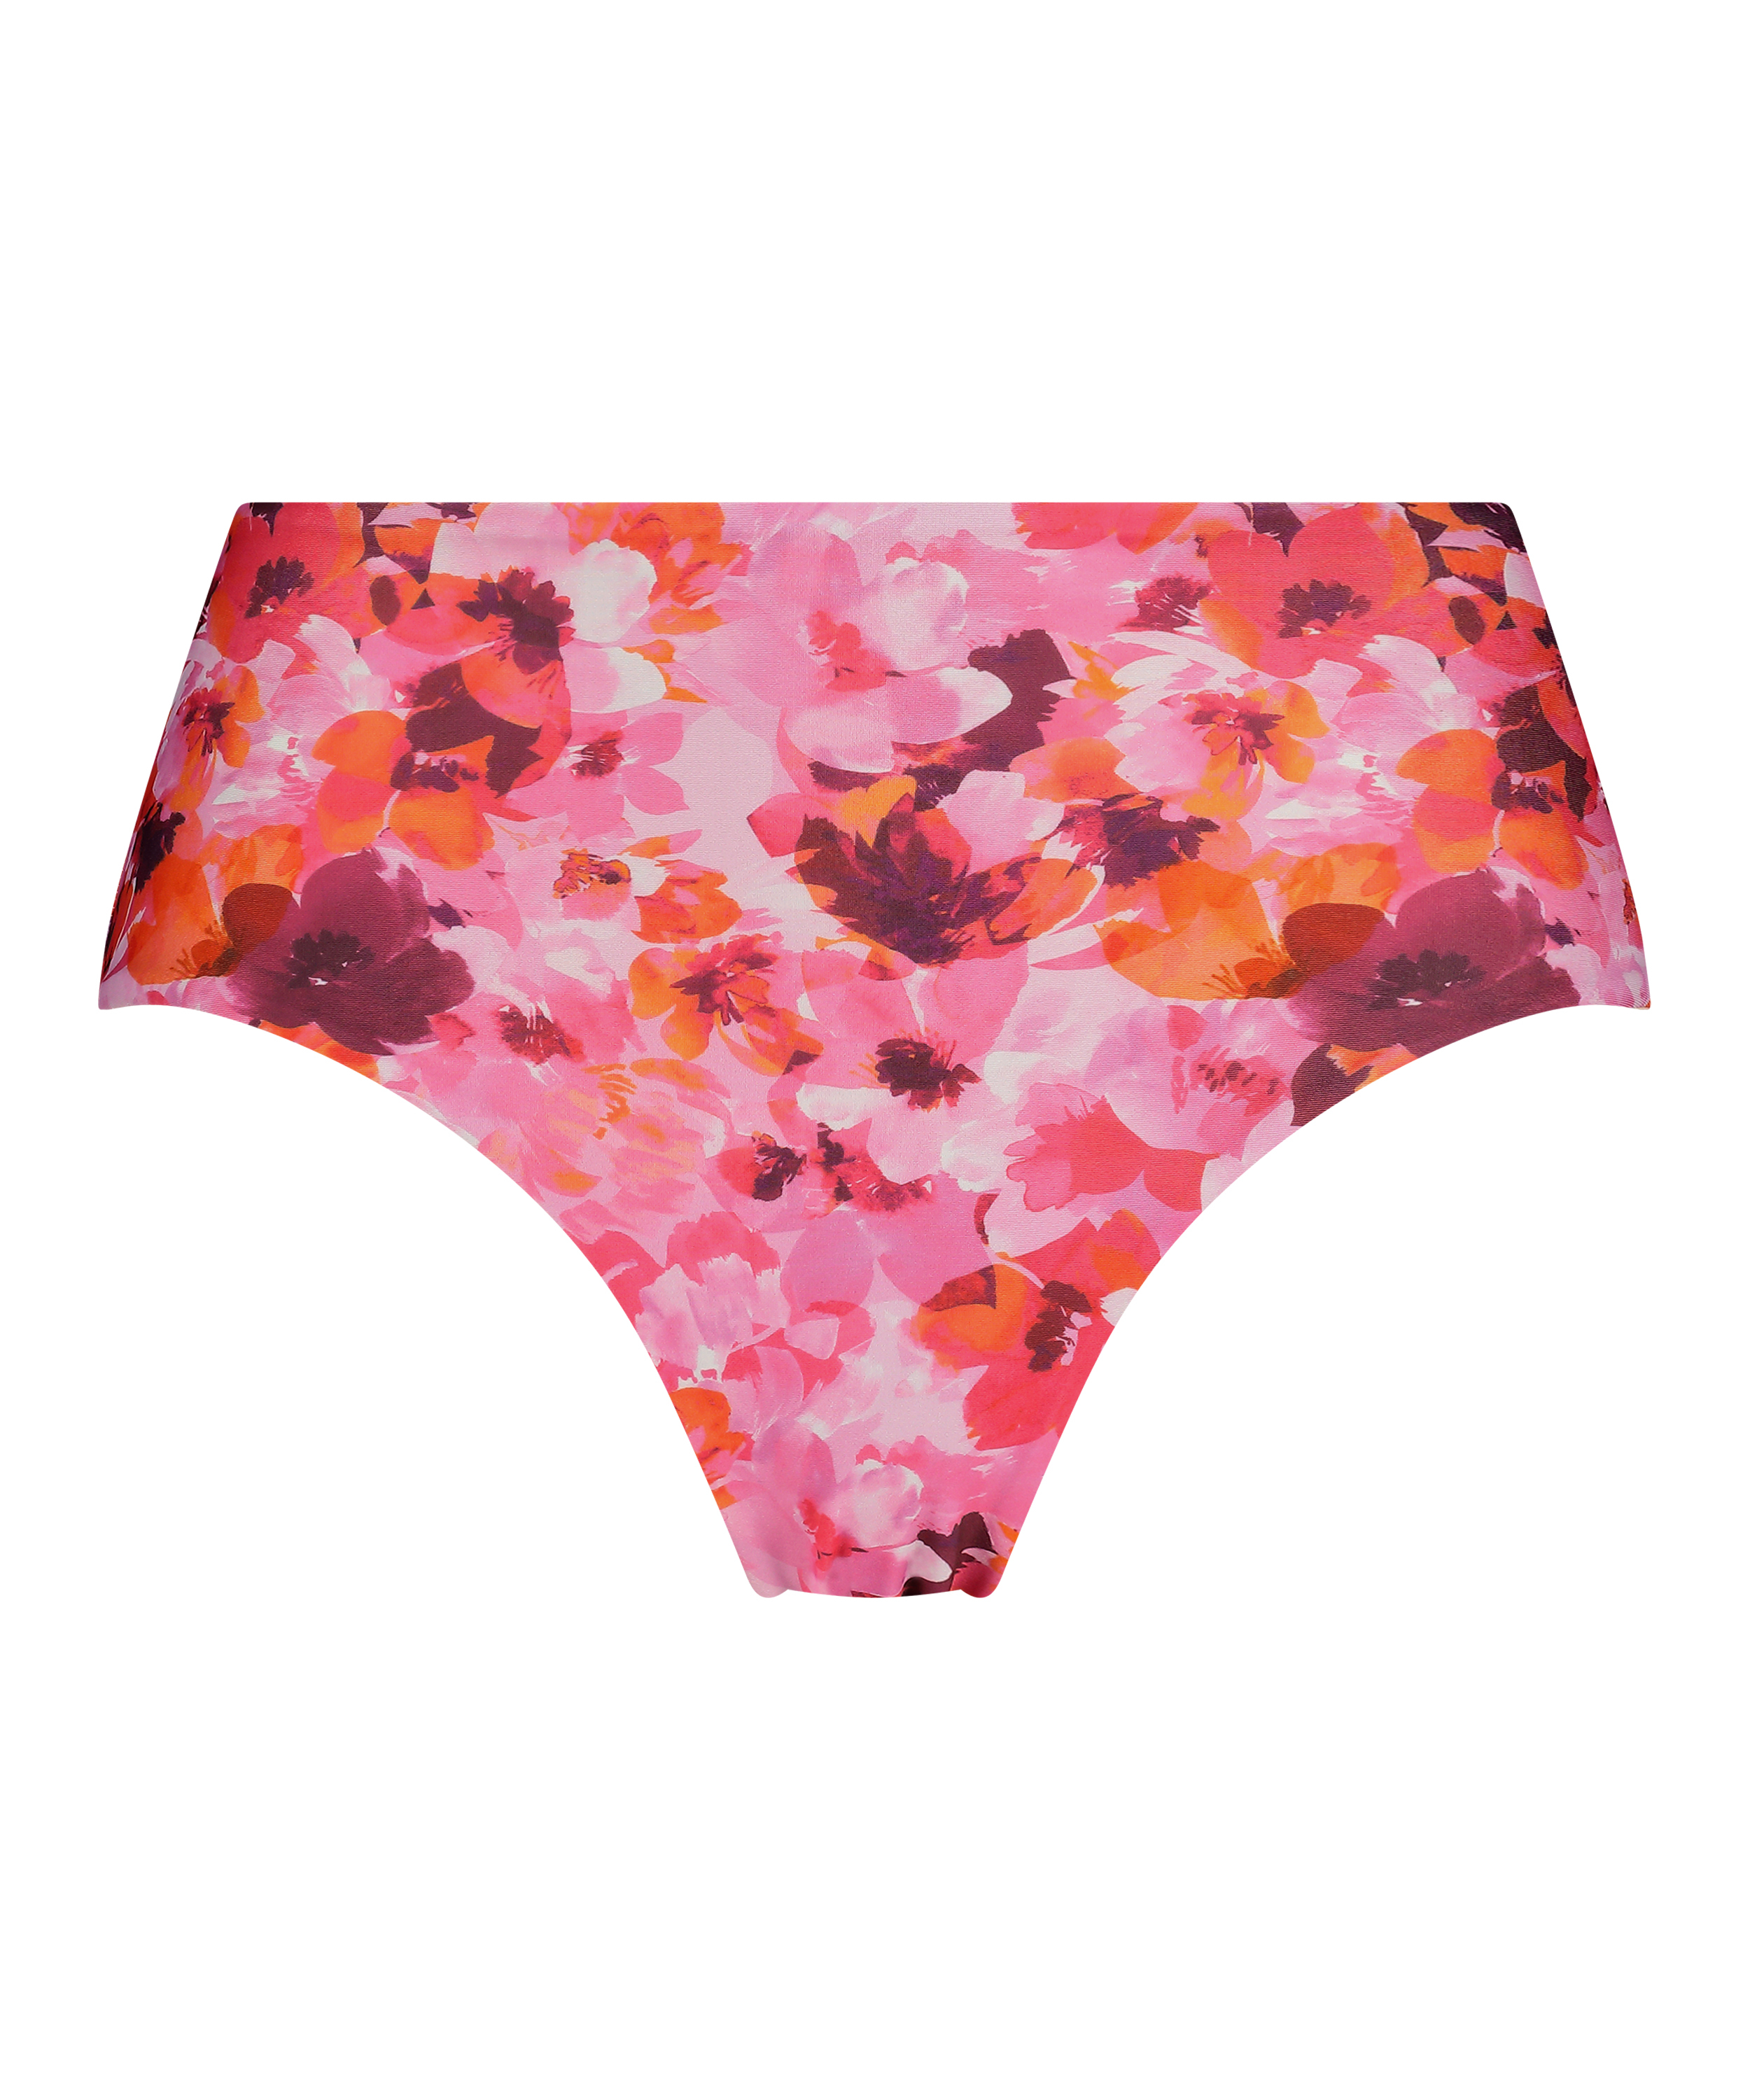 Majtki Bikini Rio Floral, Różowy, main